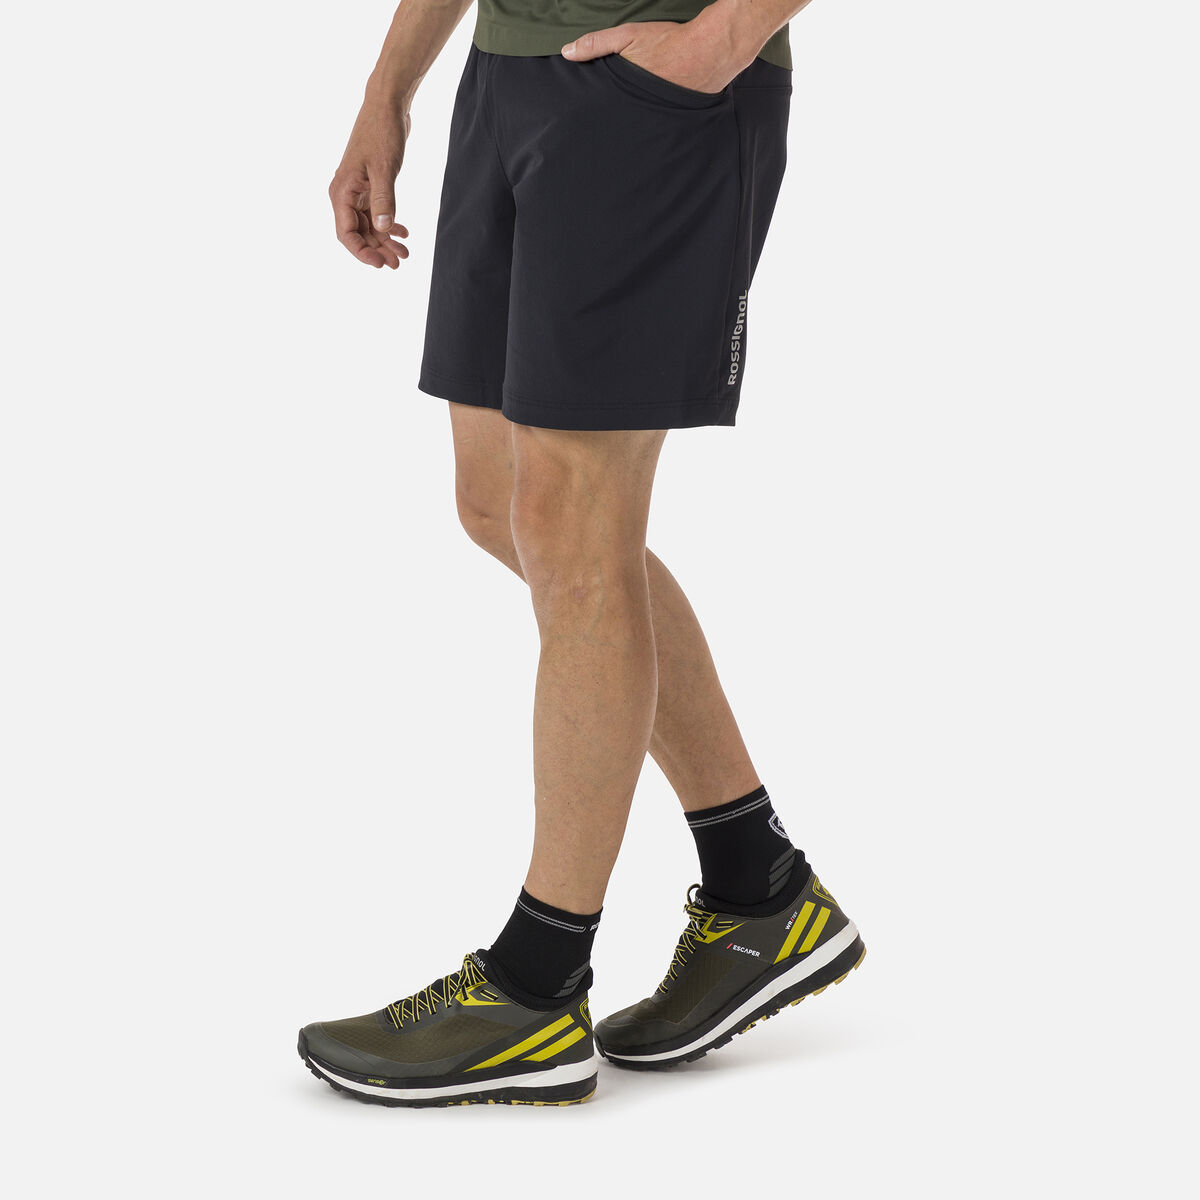 Rossignol Men's Lightweight Breathable Shorts black